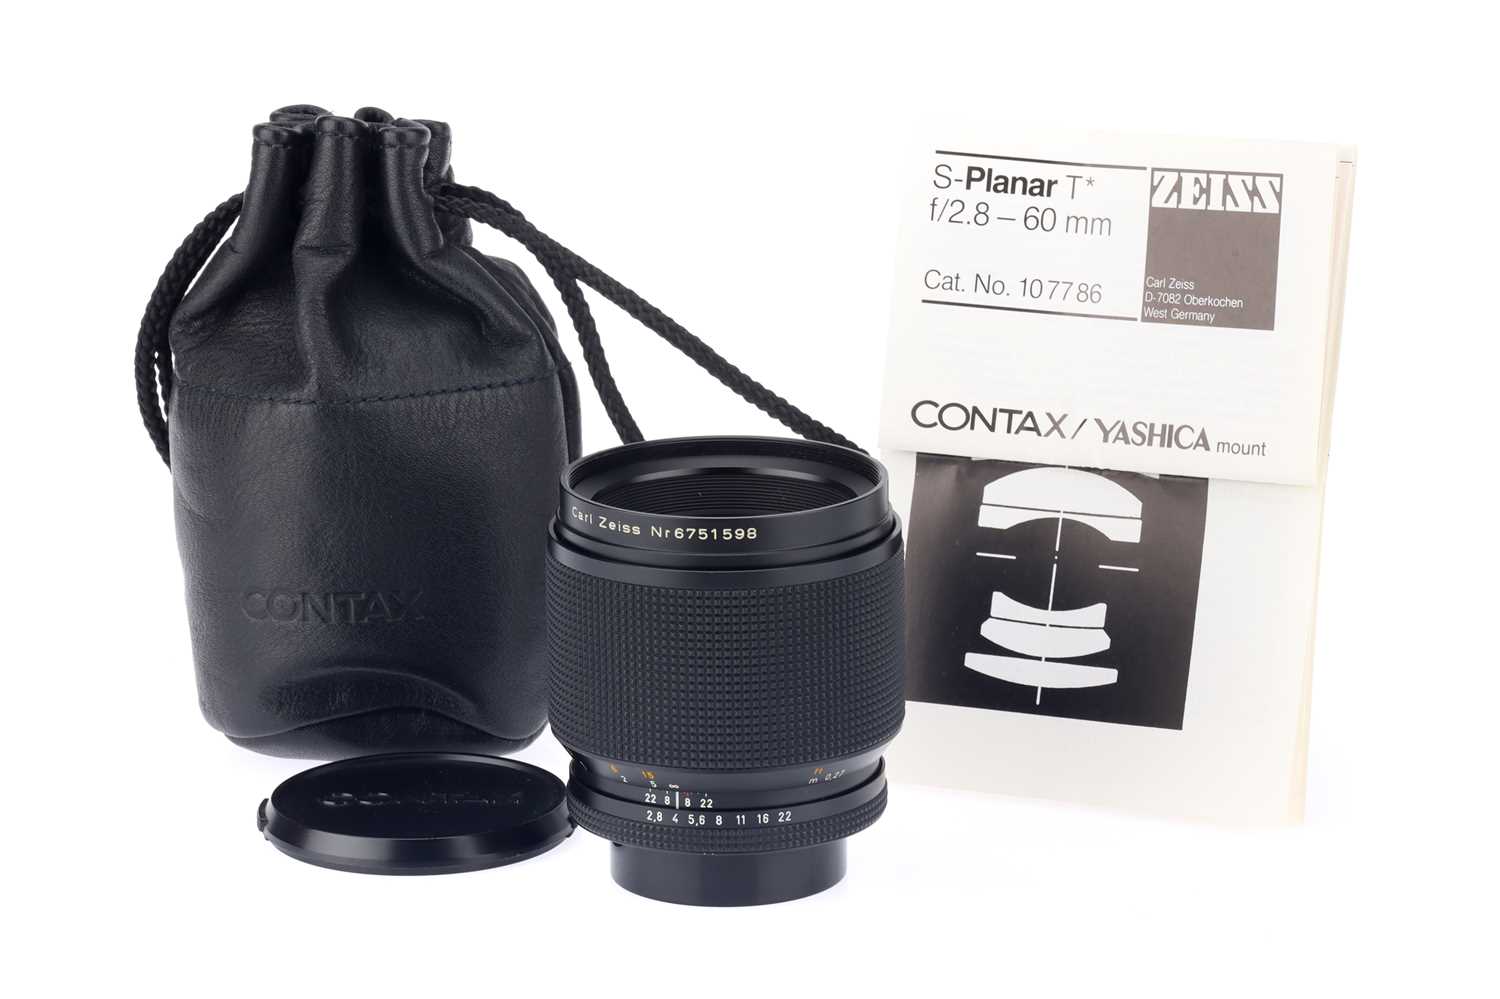 CONTAX Carl Zeiss S-Planar T＊ F2.8 60mm-